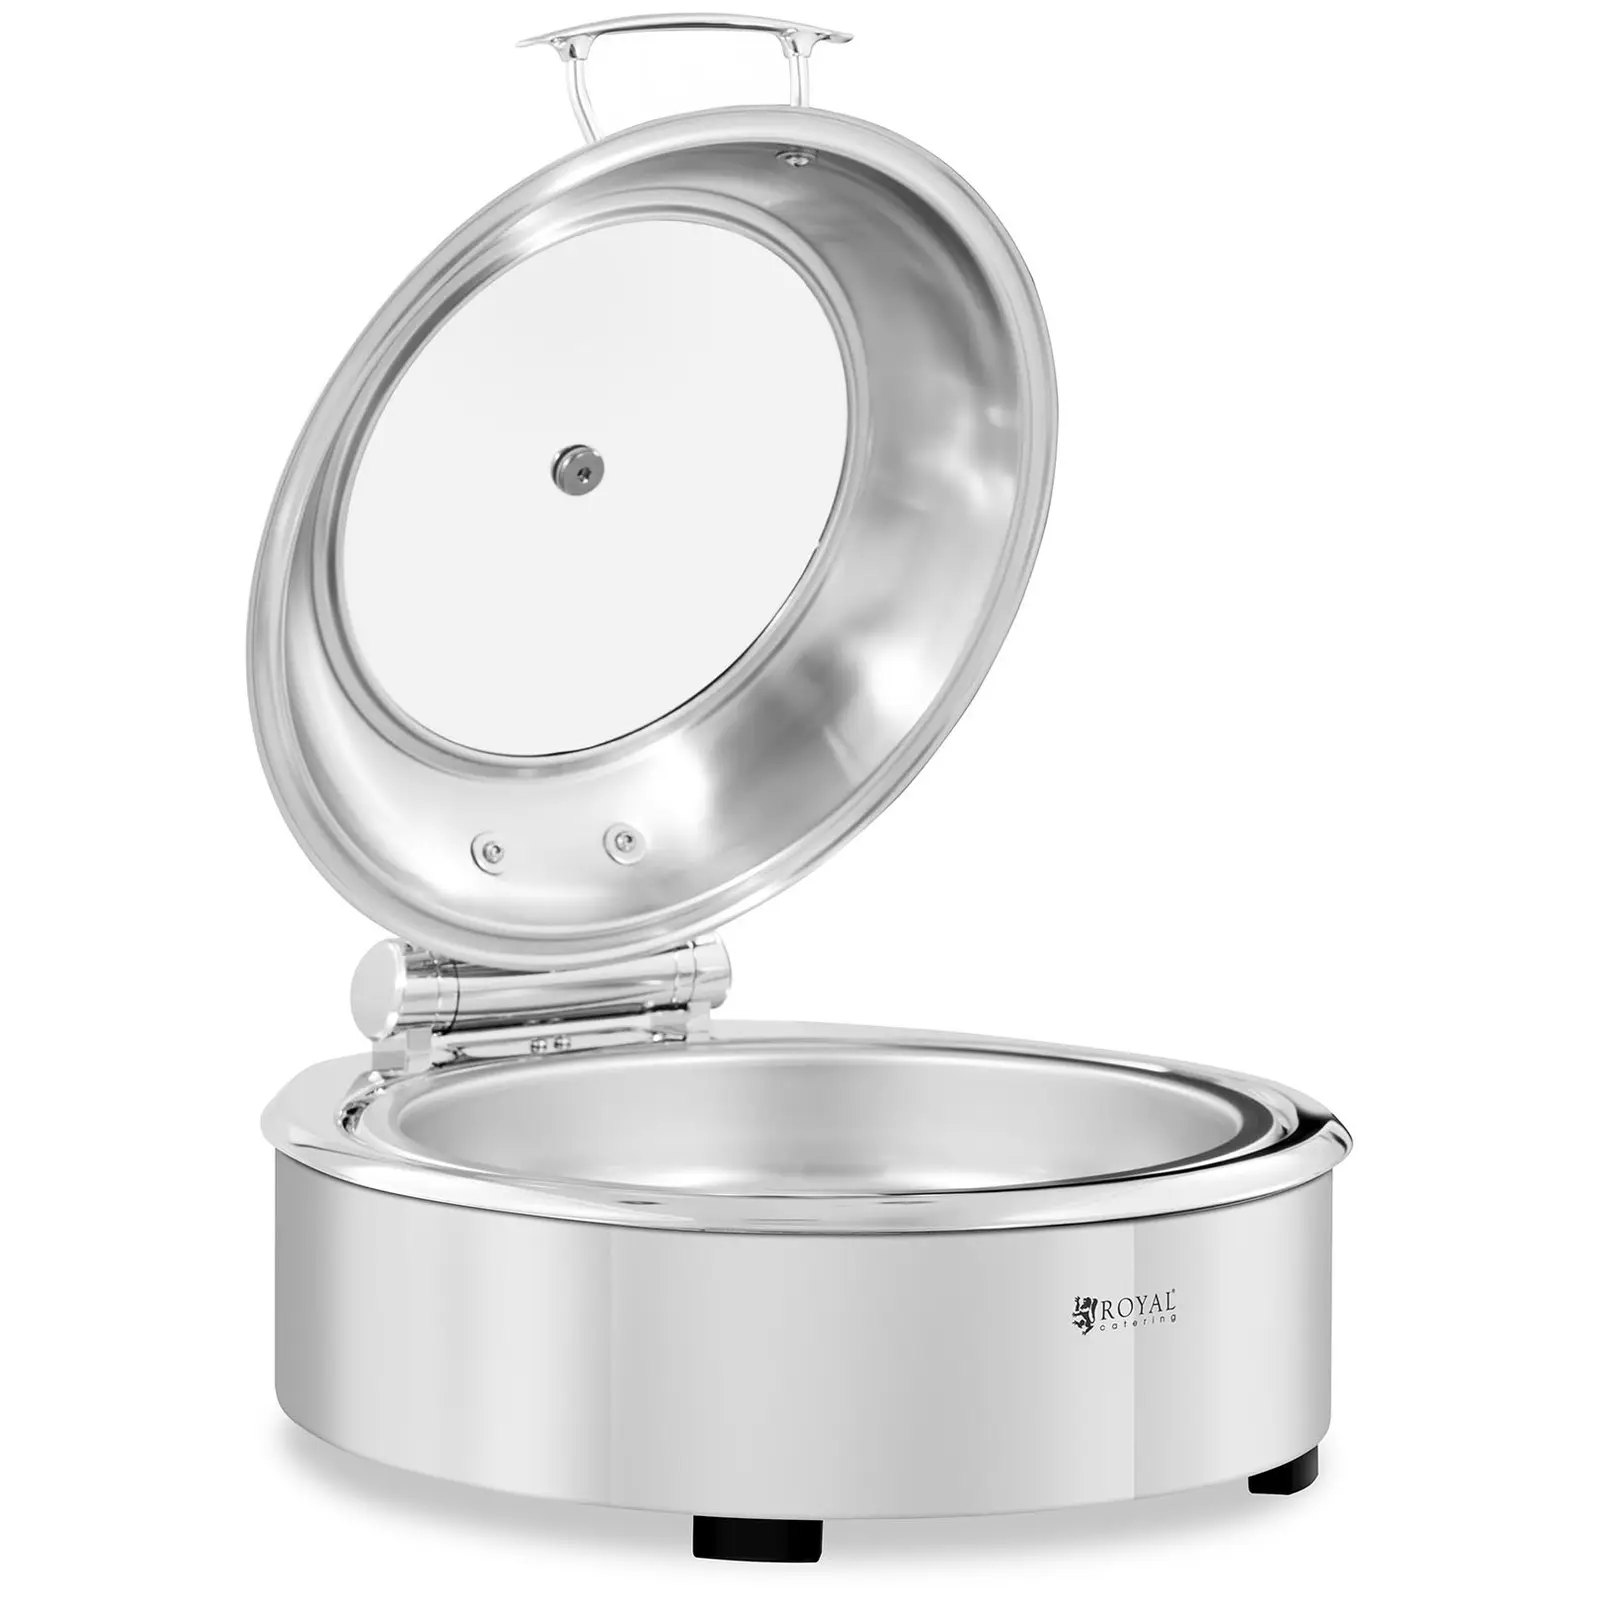 B-varer Chafing Dish - rund med visningsvindu - Royal Catering - 5.5 L - bre